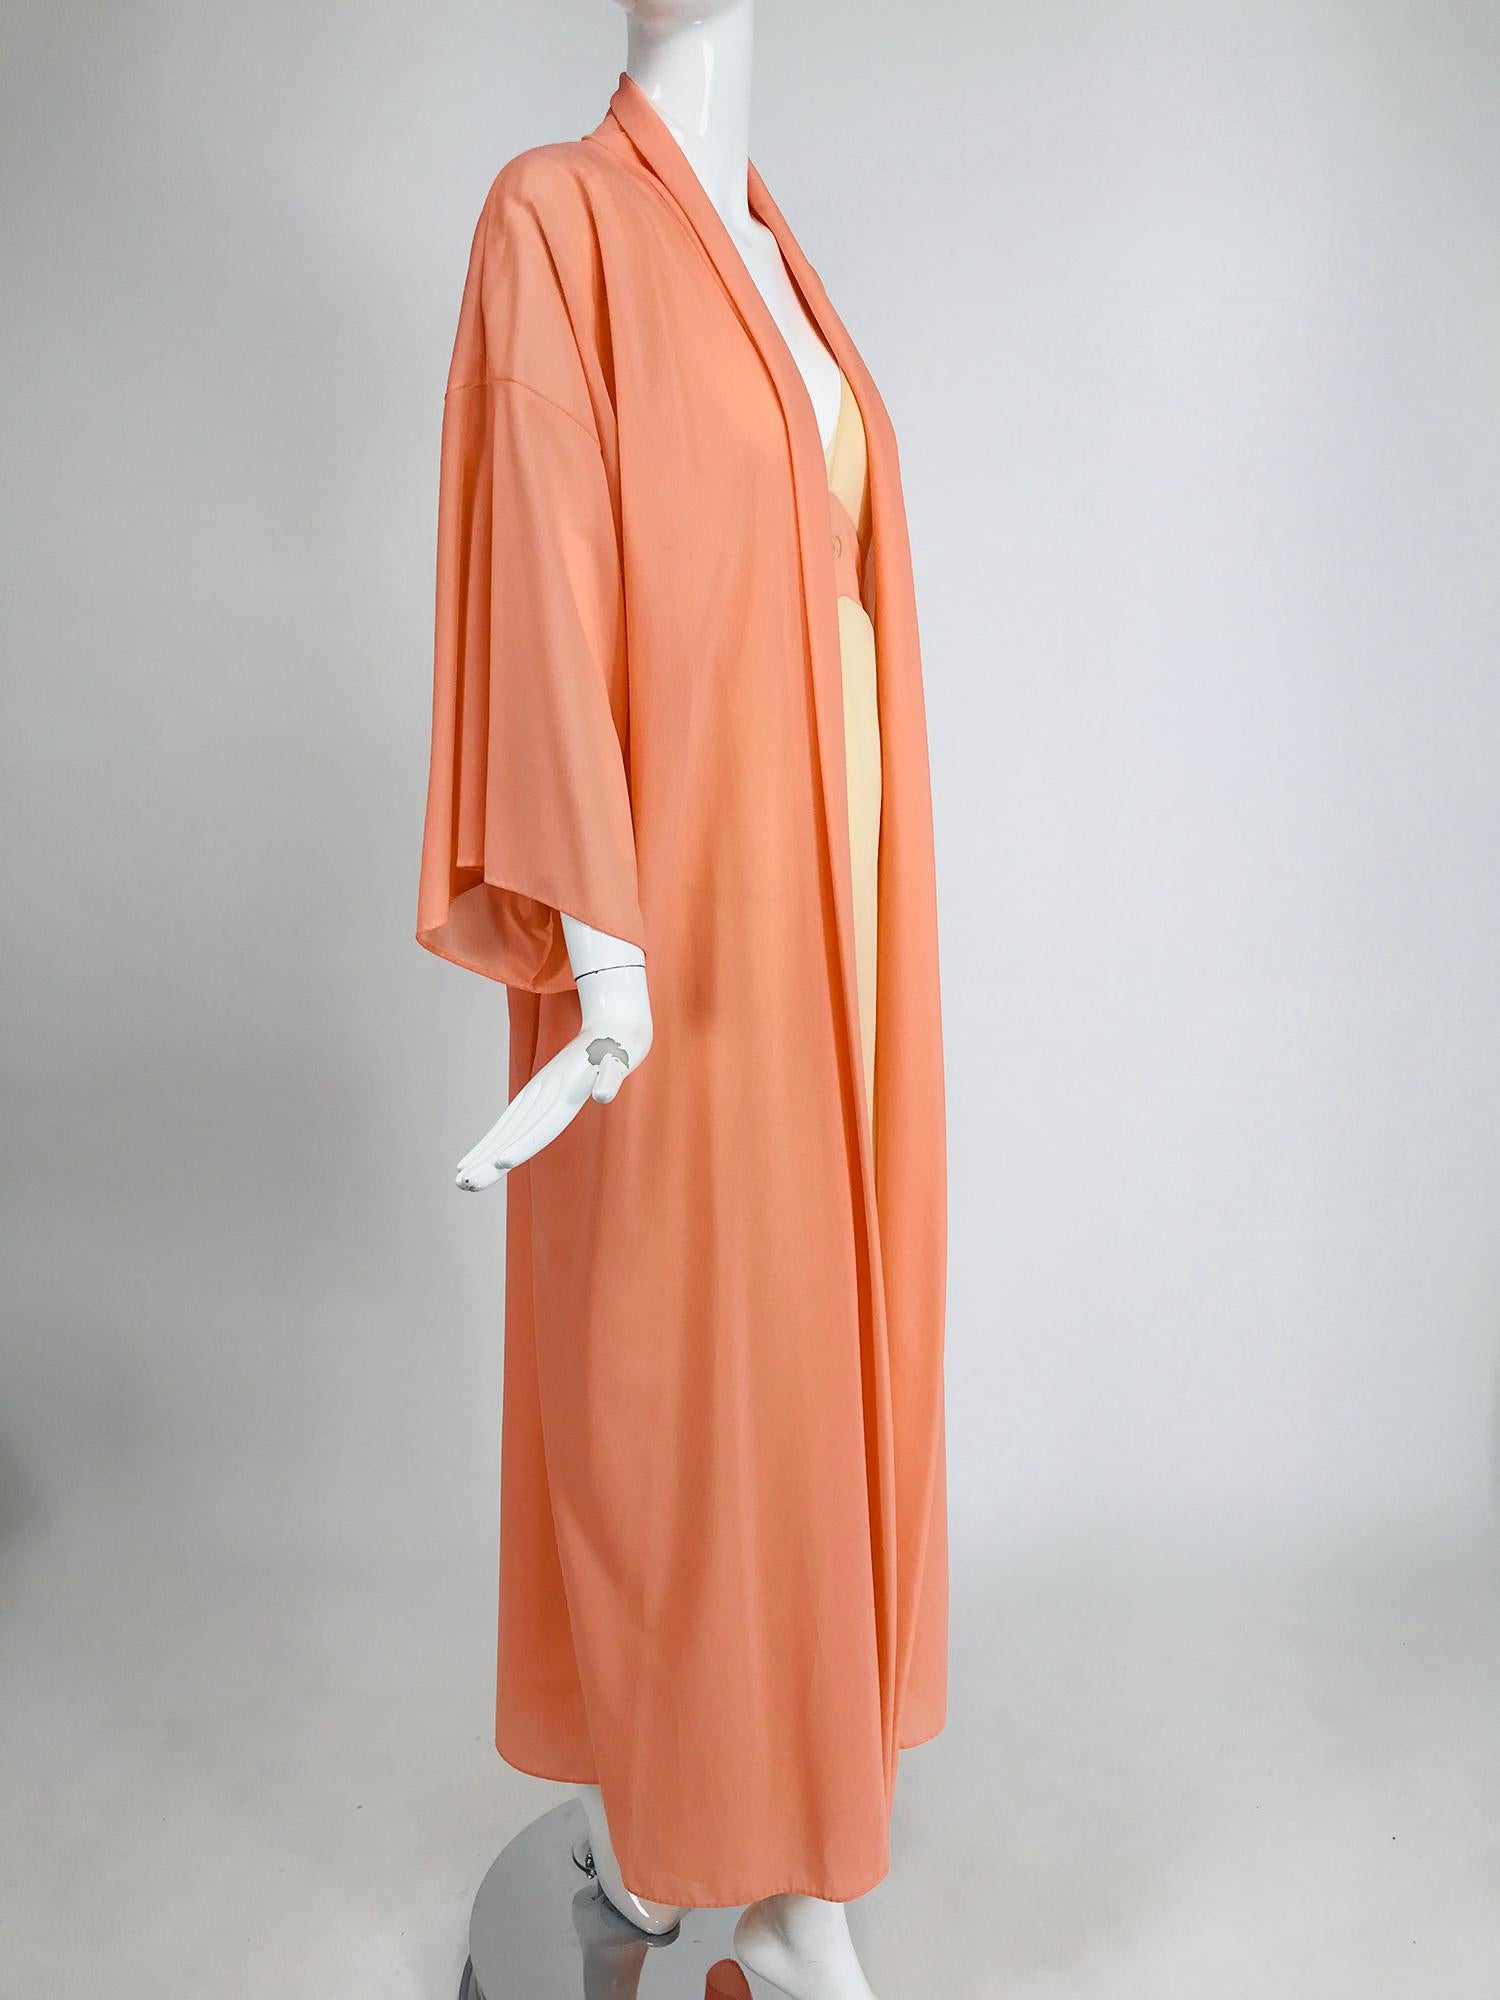 Orange Emilio Pucci for Formfit Rogers 2pc. Sheer Peignoir Robe & Gown 1970s